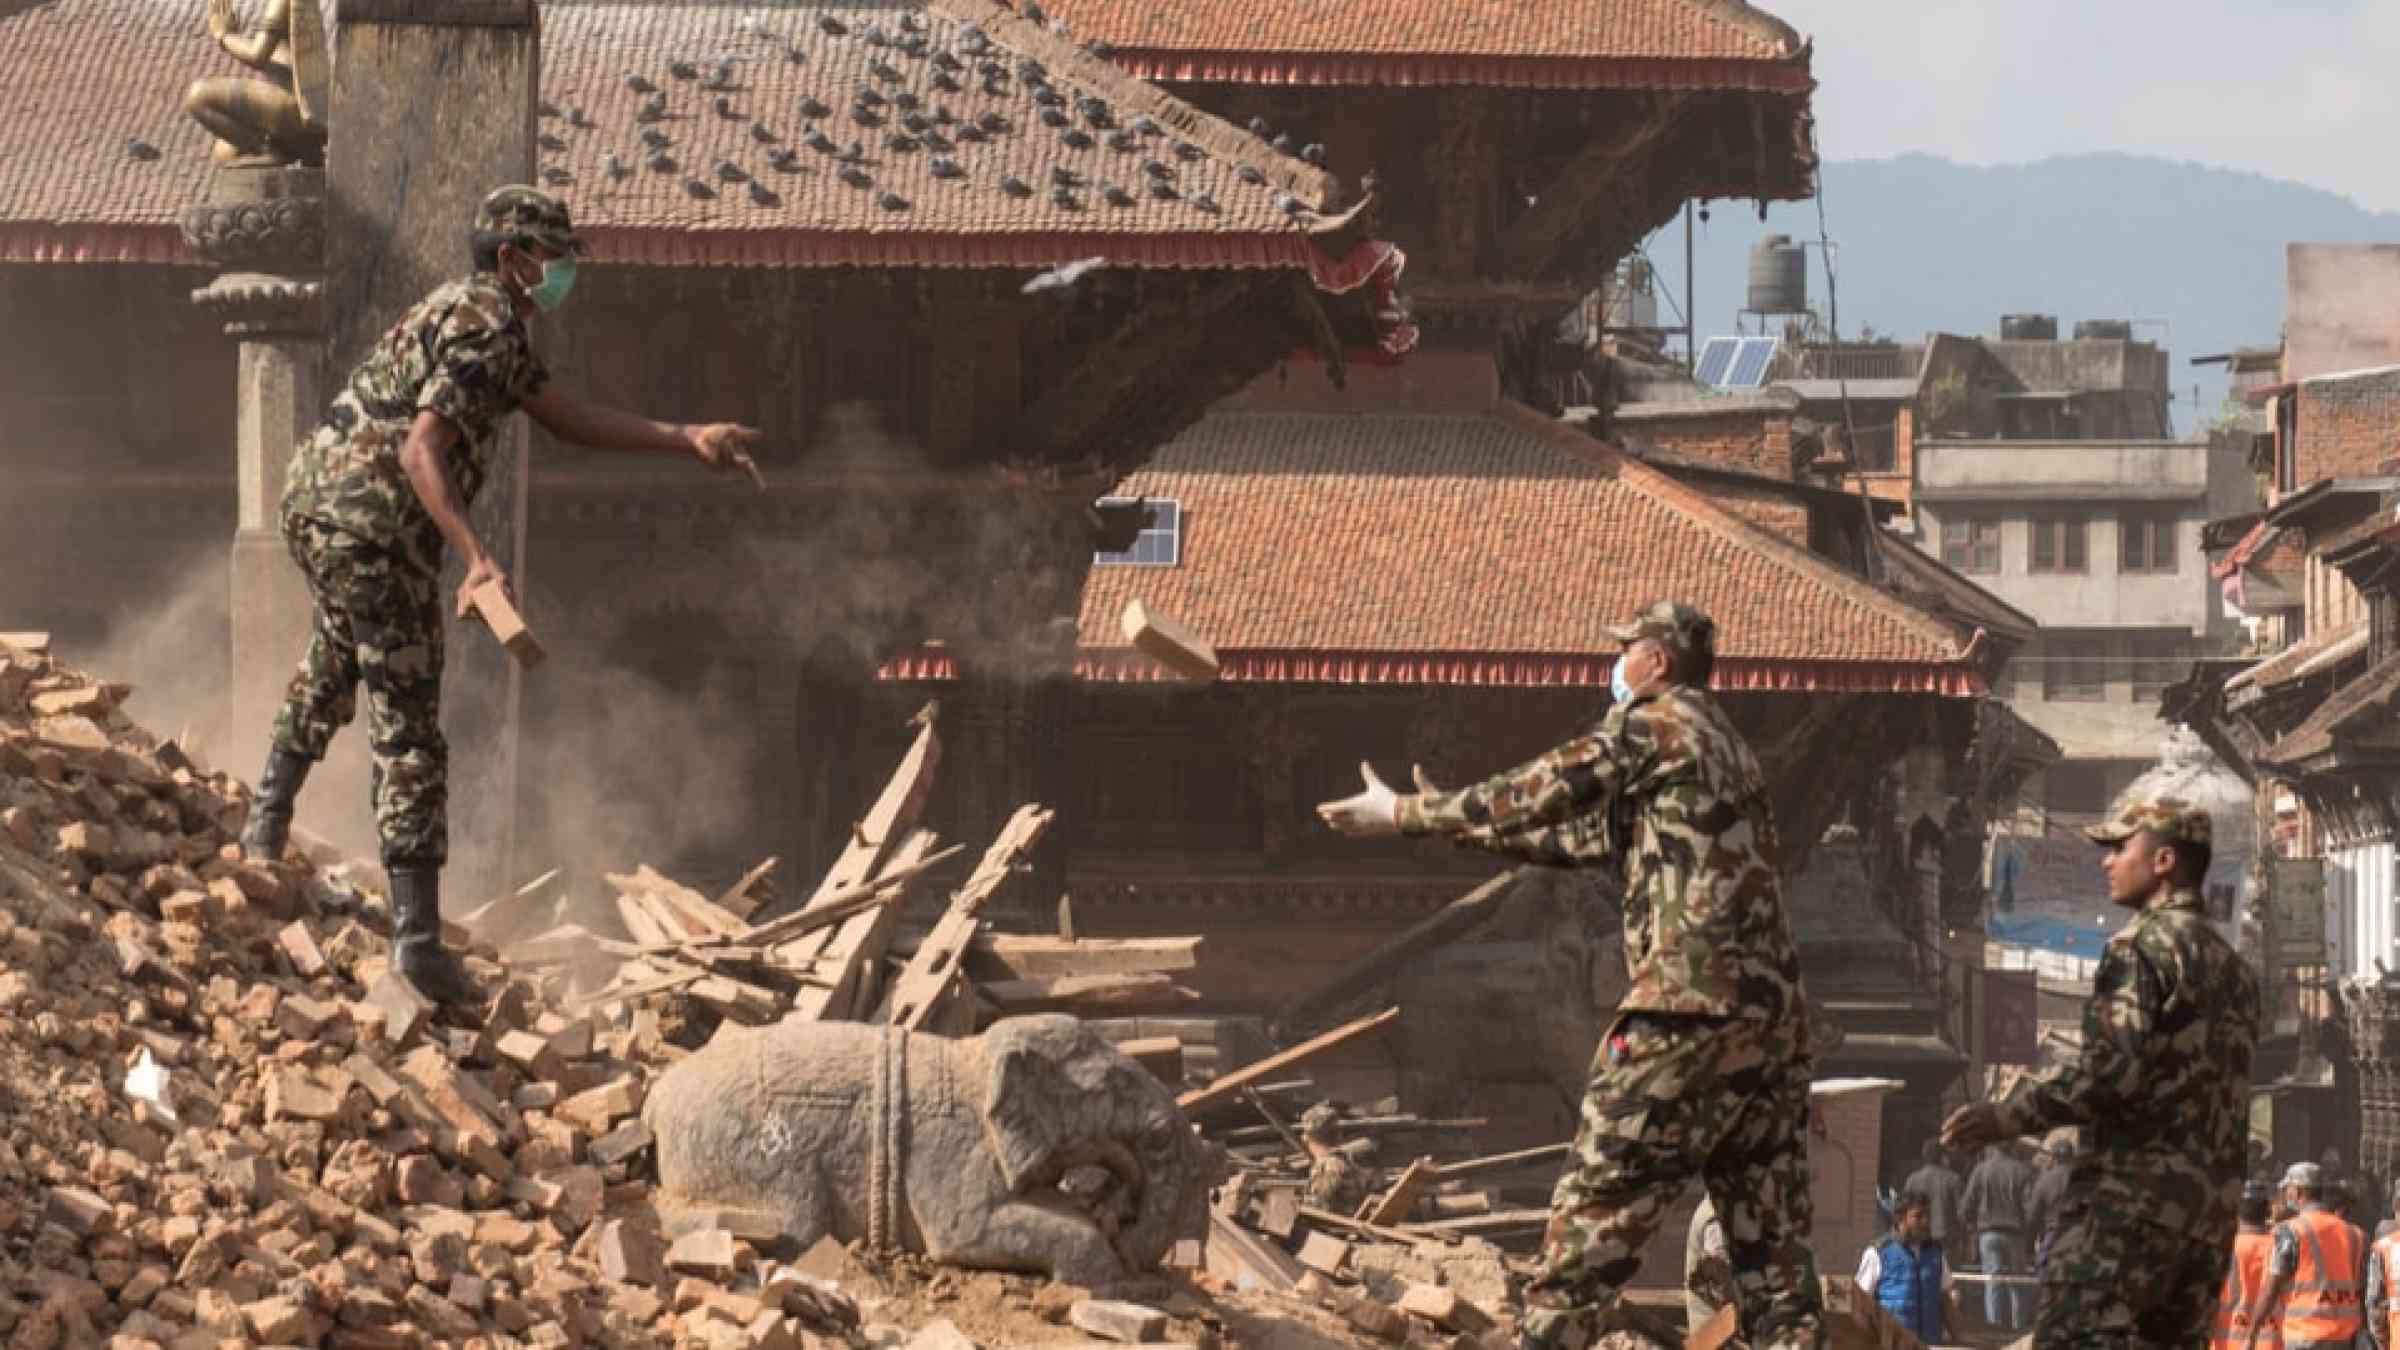 case study on nepal earthquake 2015